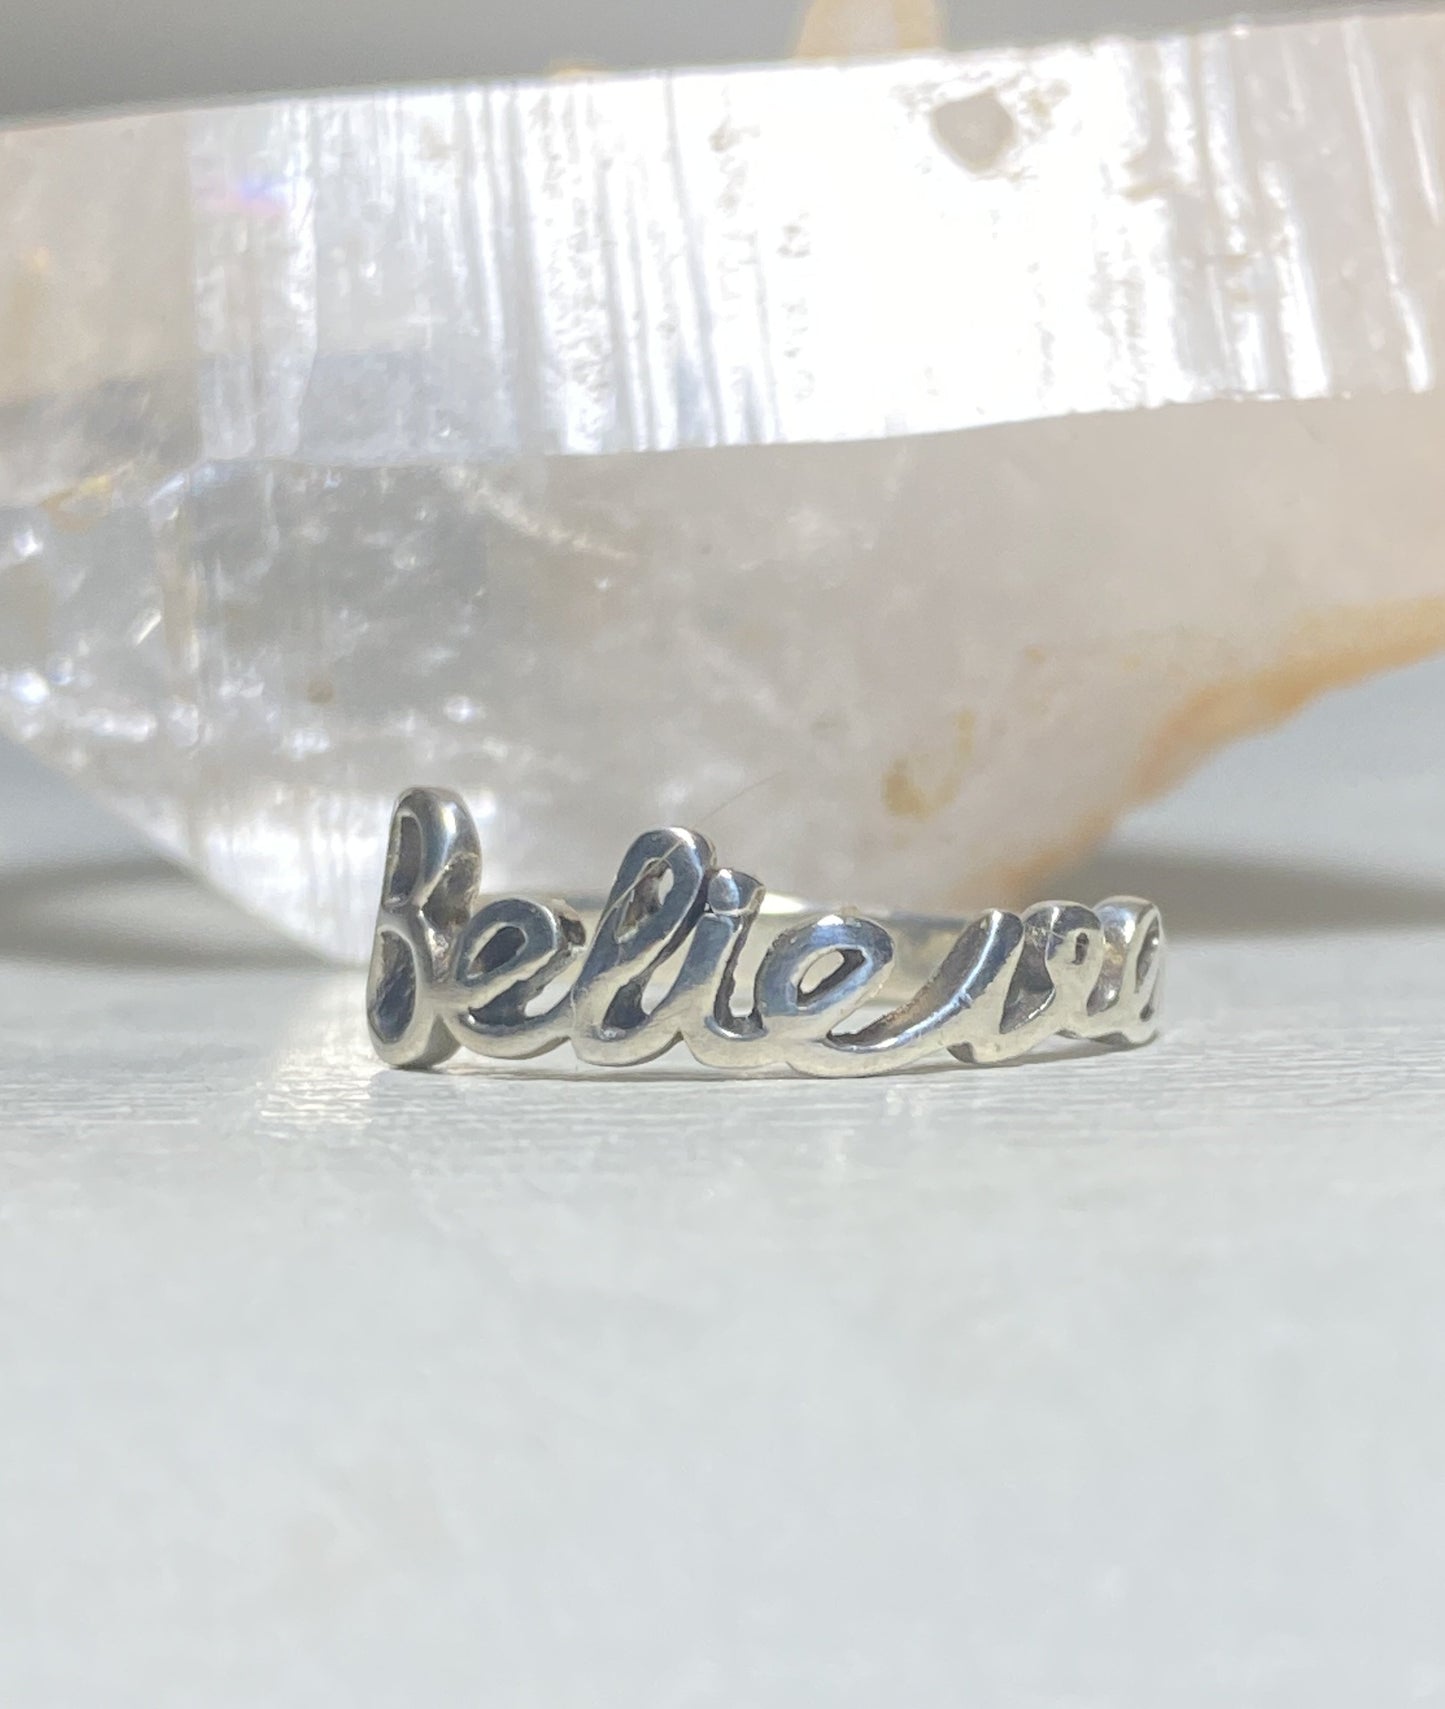 Believe ring word band sterling silver women girls